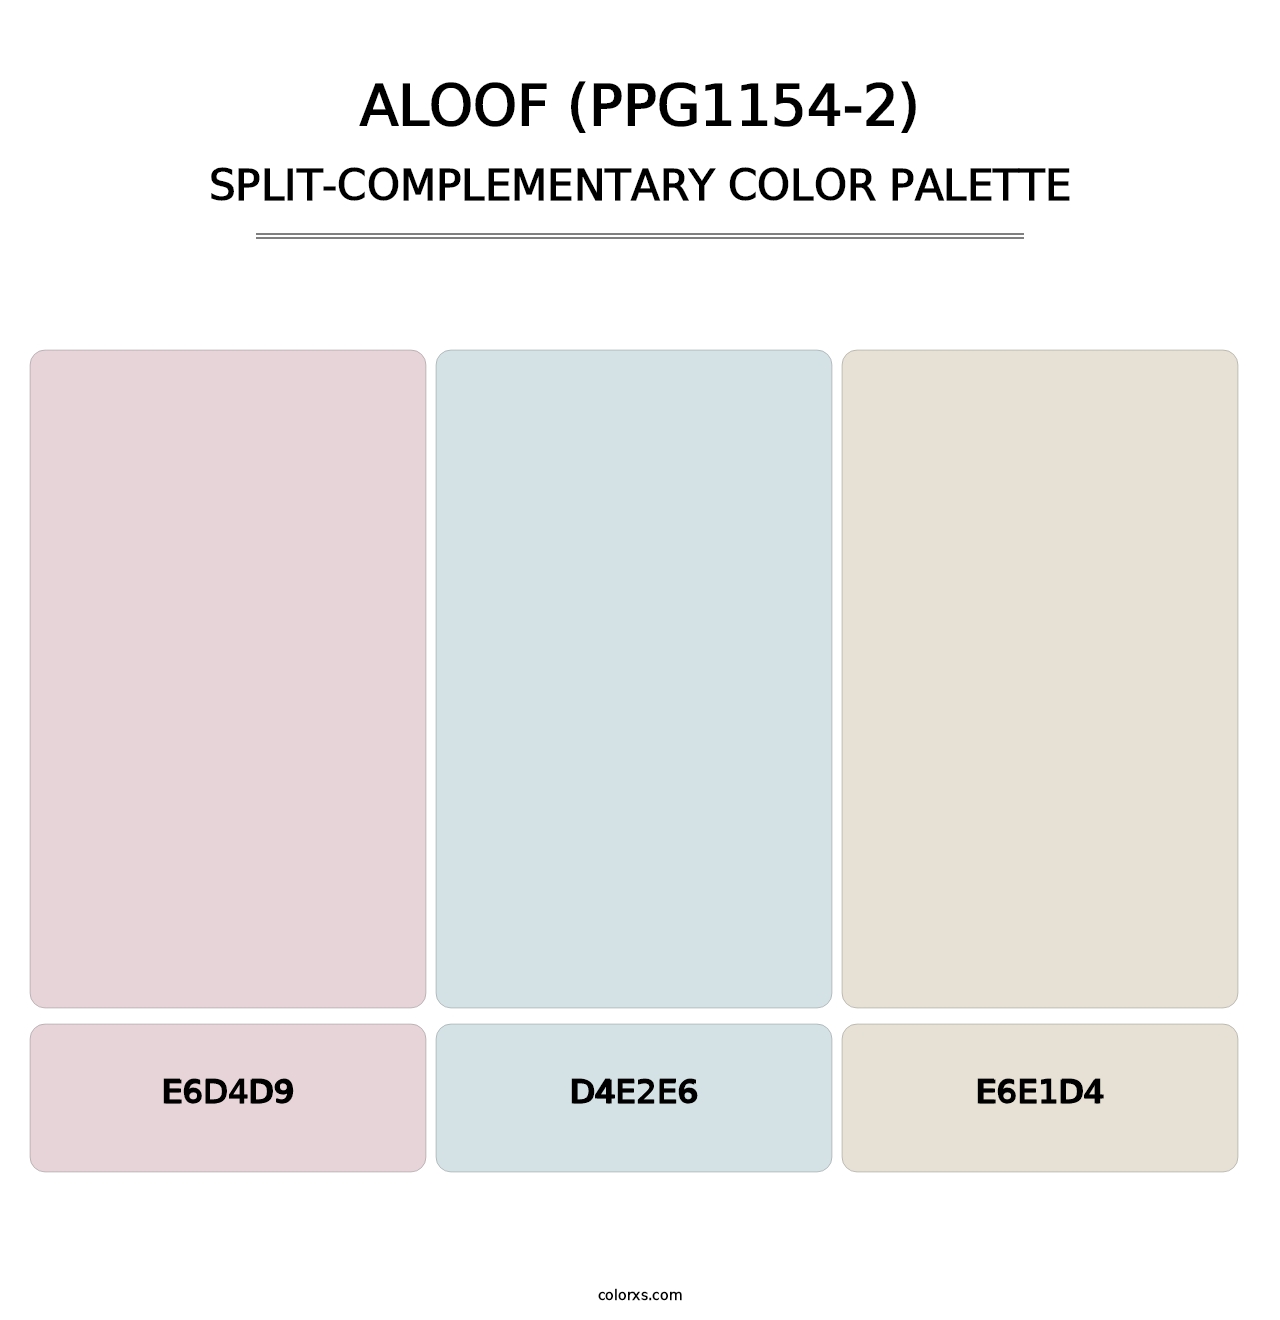 Aloof (PPG1154-2) - Split-Complementary Color Palette